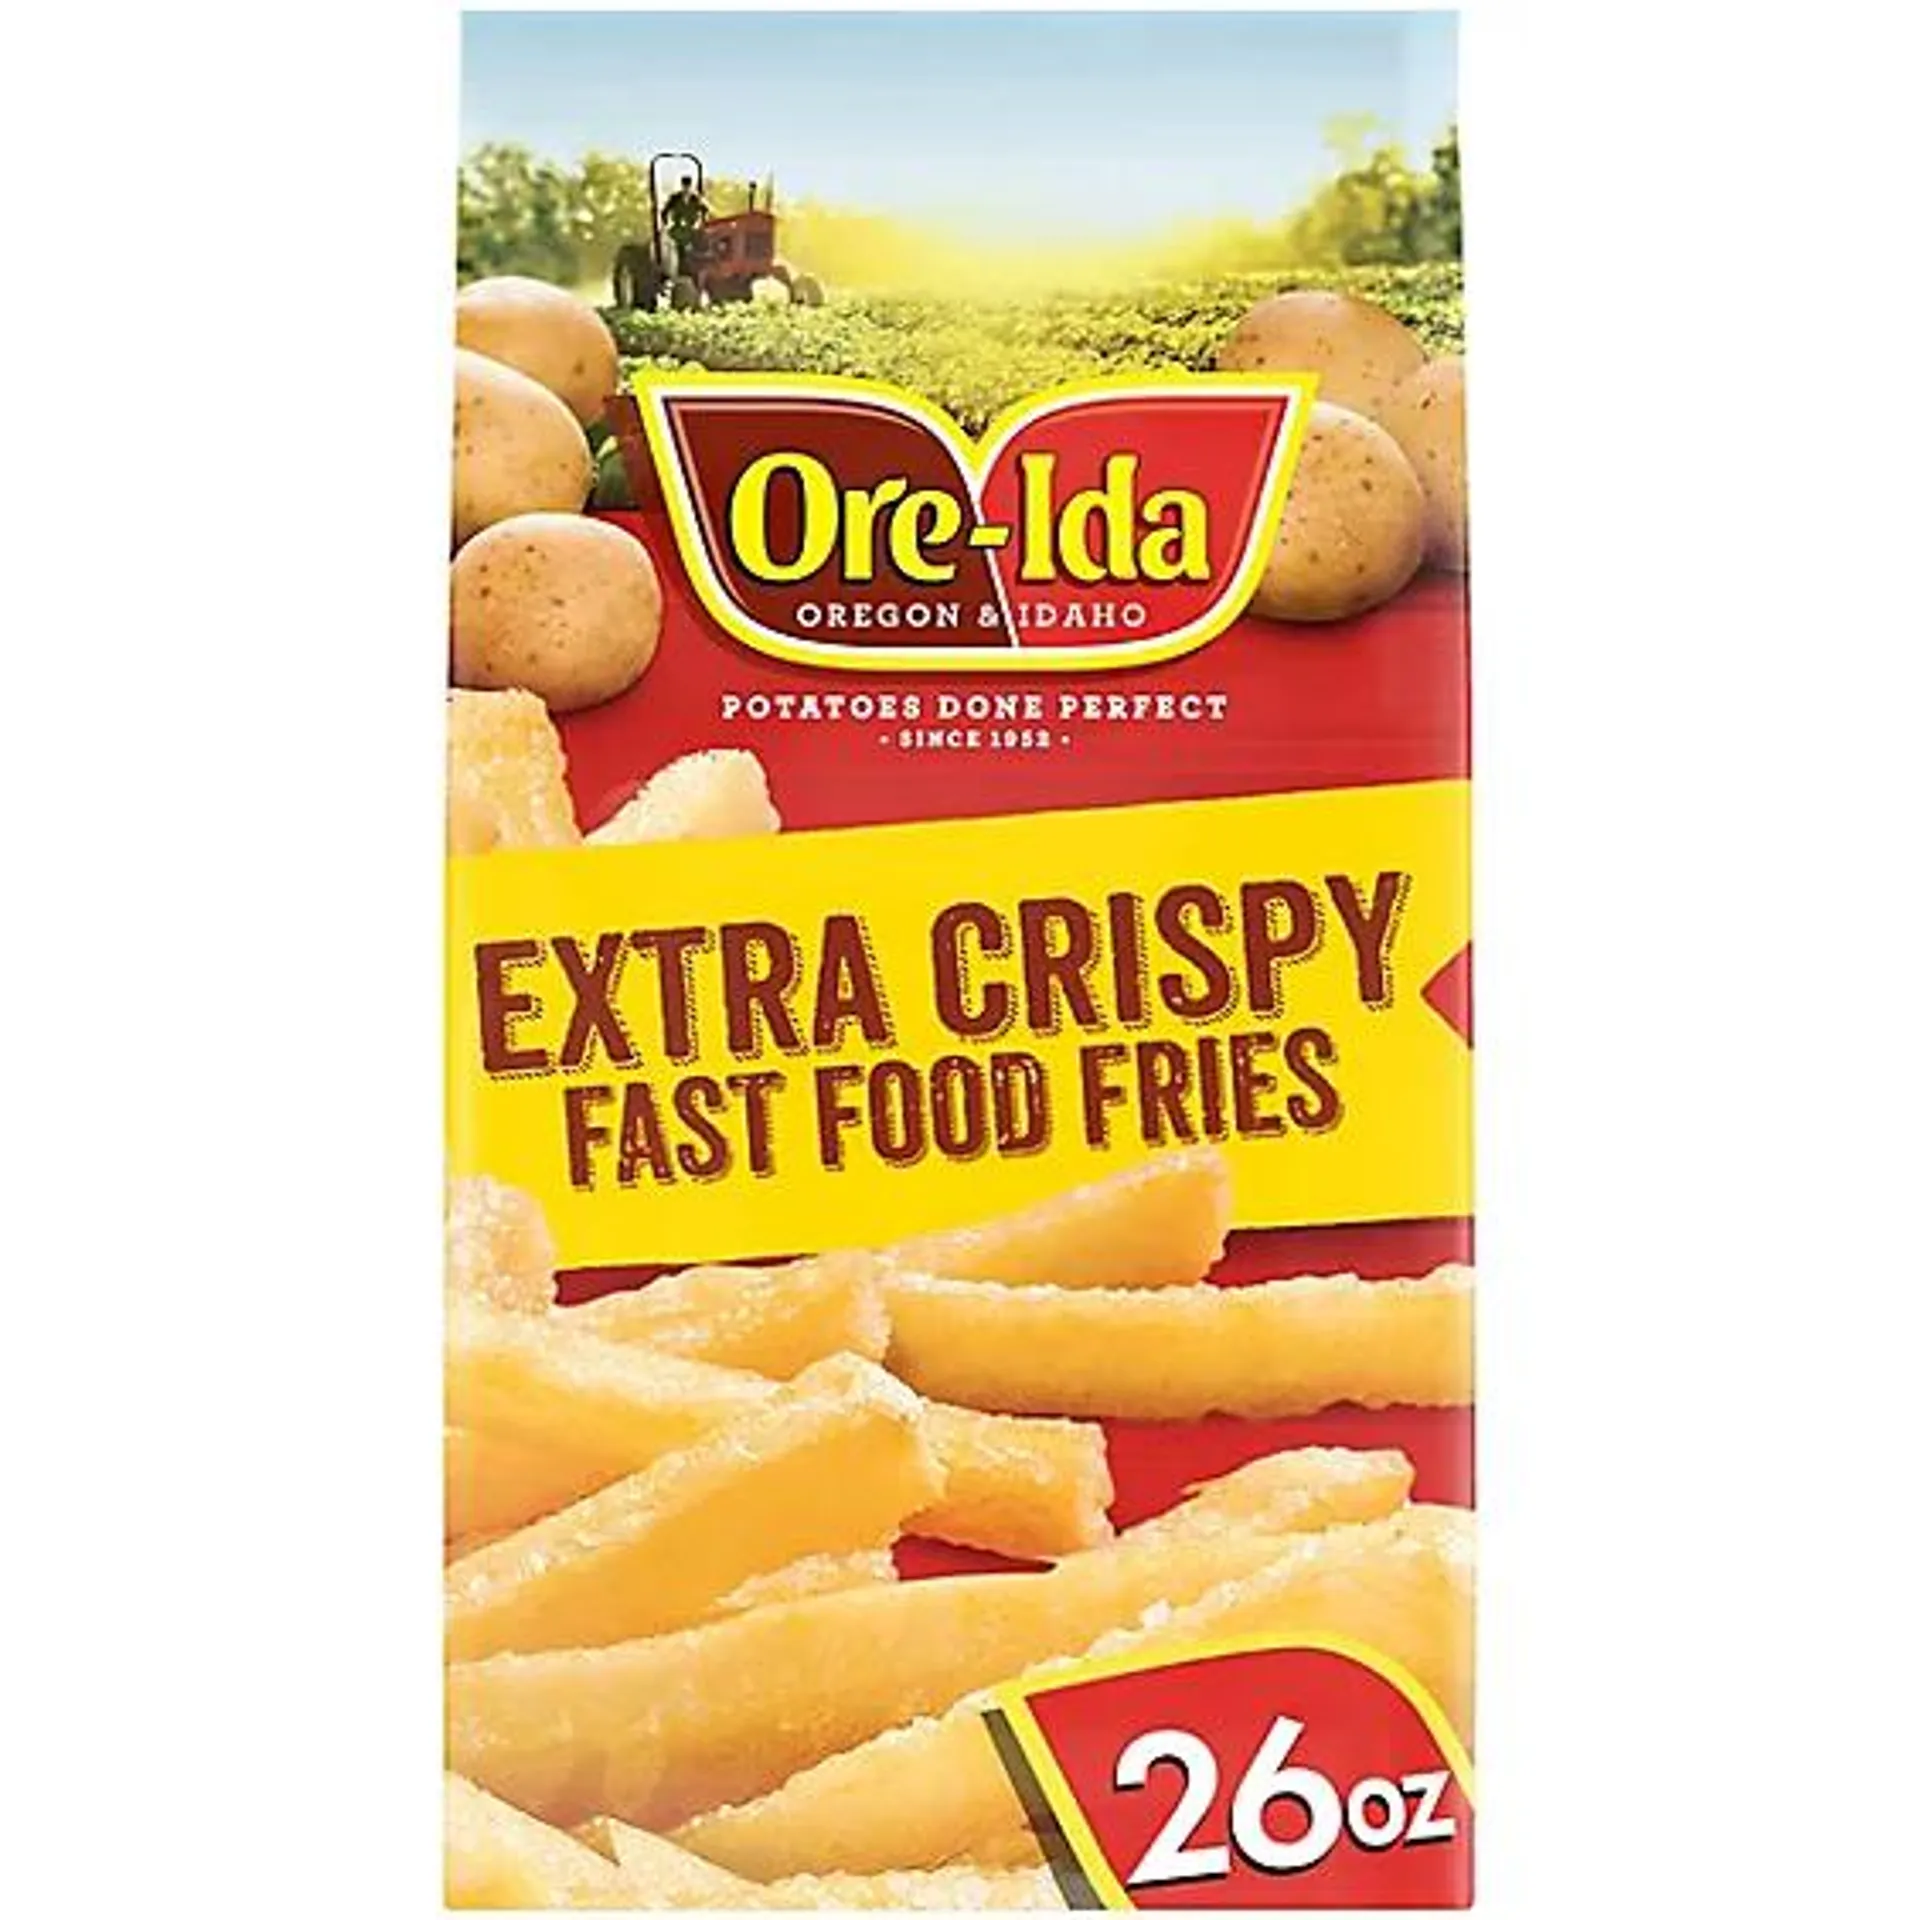 Ore-Ida Extra Crispy Fast Food French Fries Fried Frozen Potatoes Bag - 26 Oz